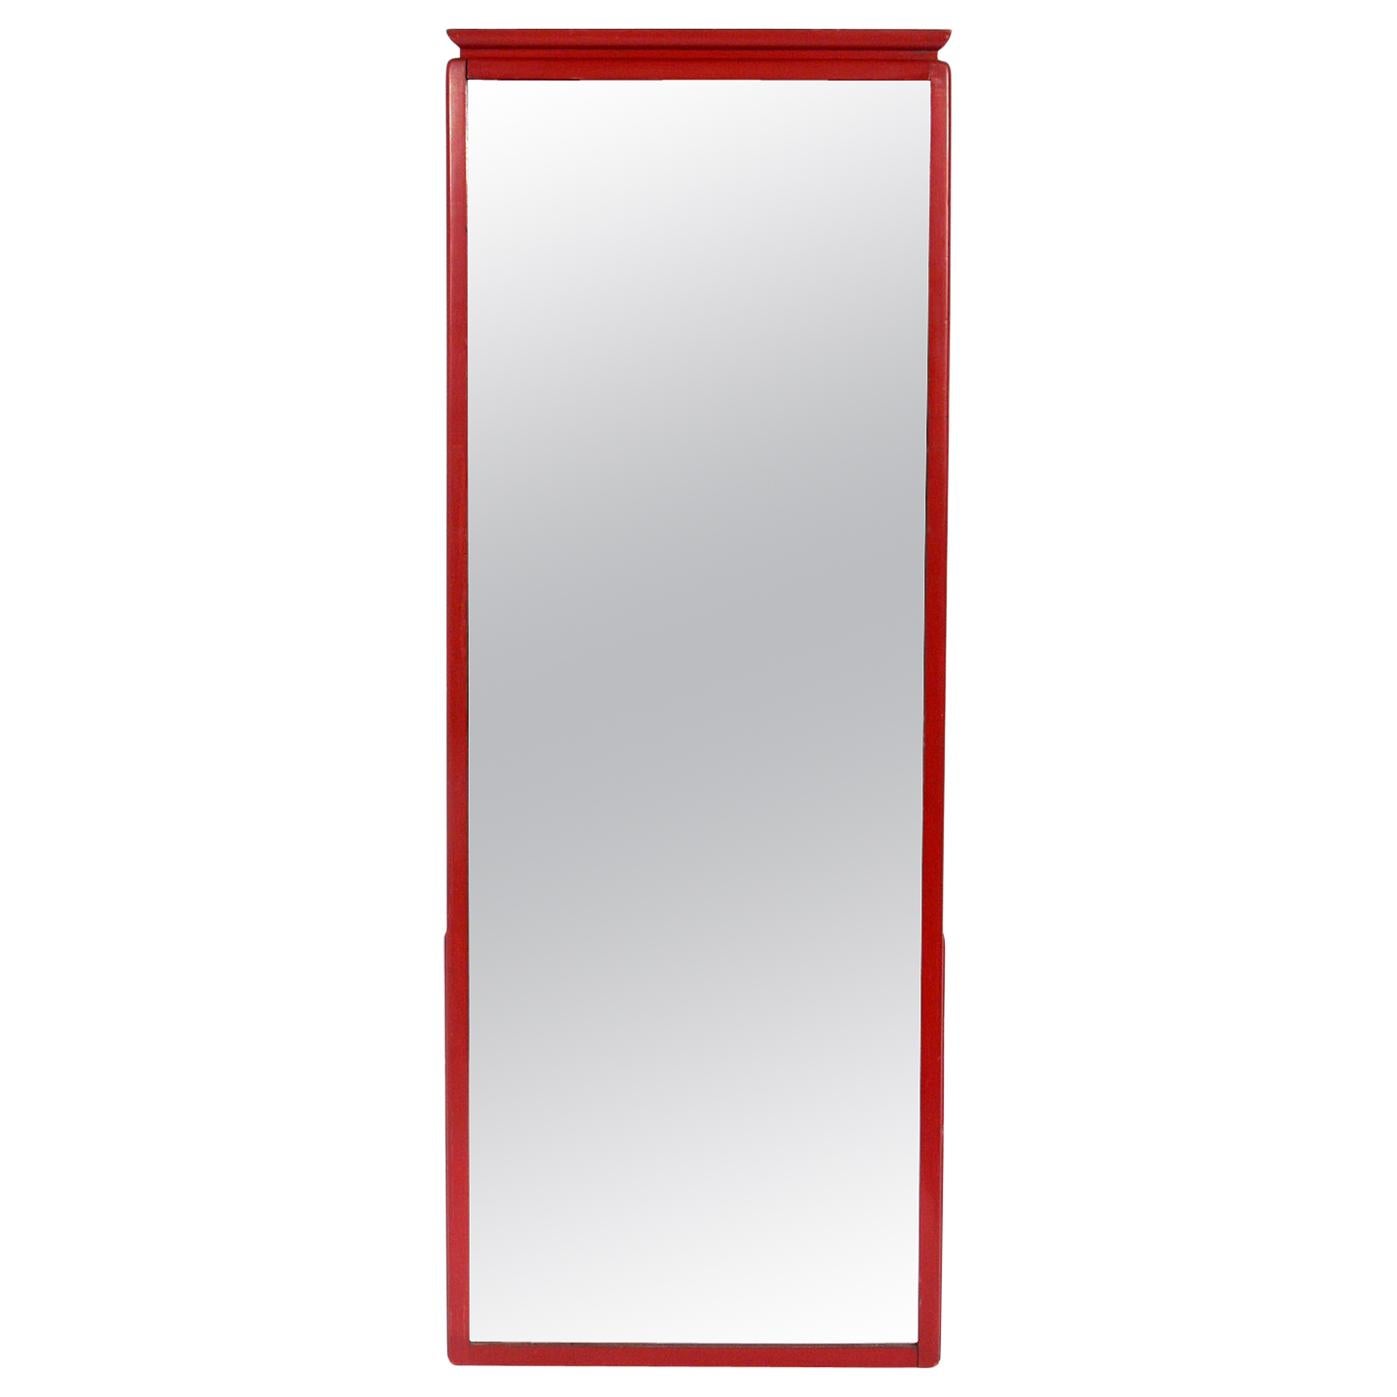 Tall Art Deco Mirror Designed by Donald Deskey